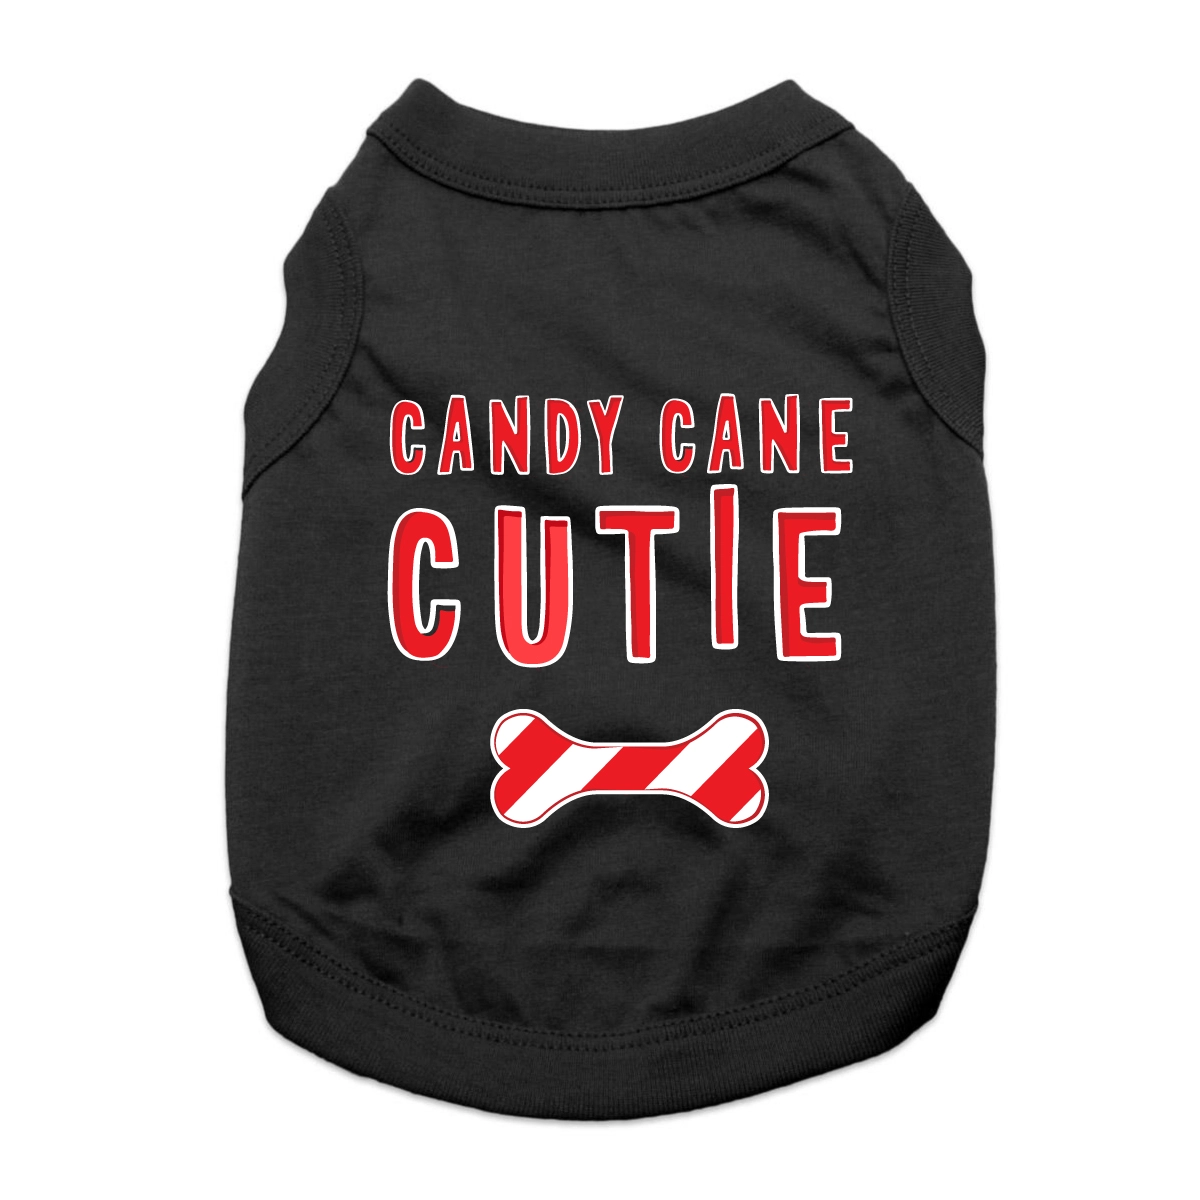 Candy Cane Cutie Dog Shirt - Black